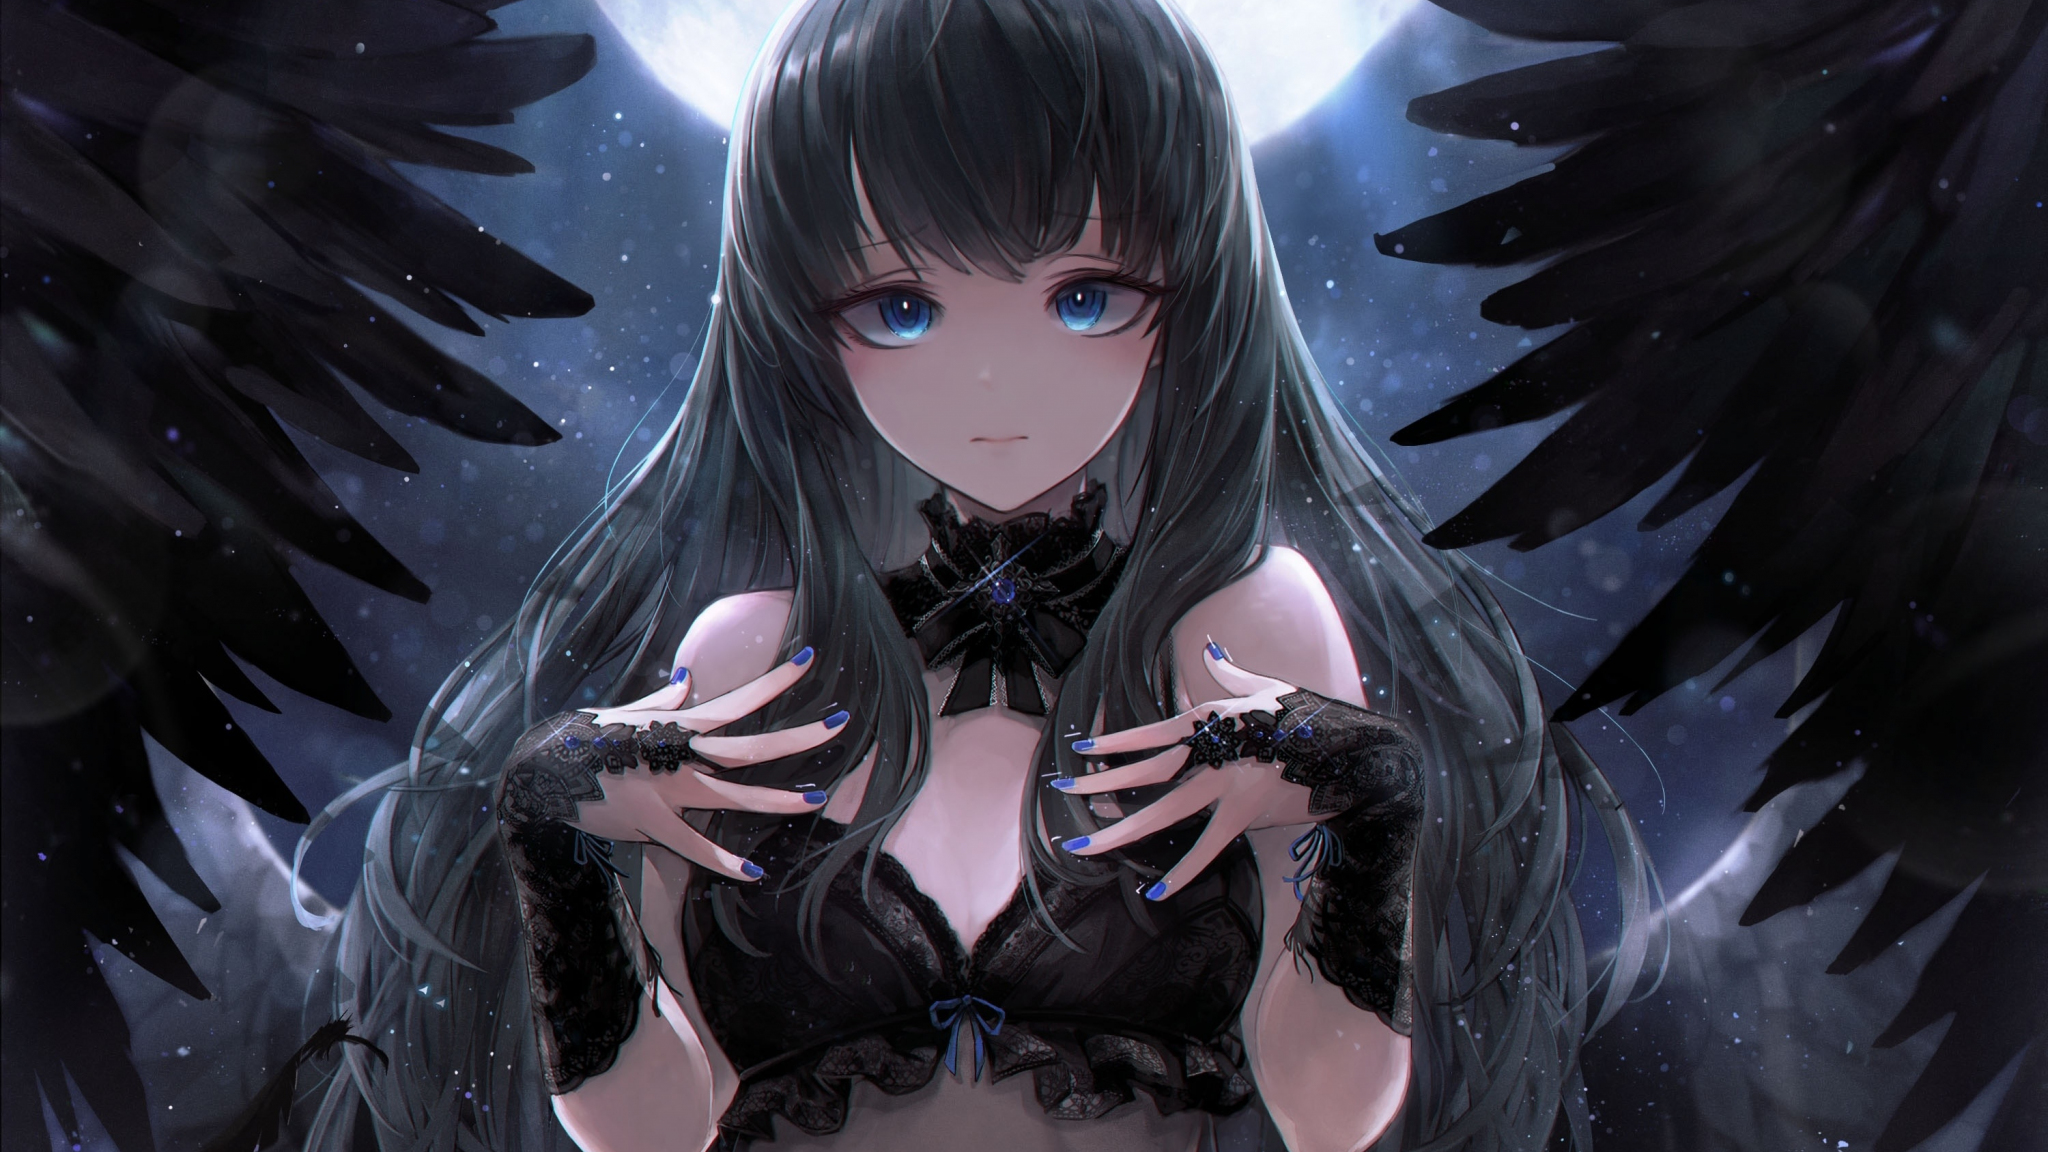 Download 2048x1152 Wallpaper Black Angel Cute Anime Girl Art